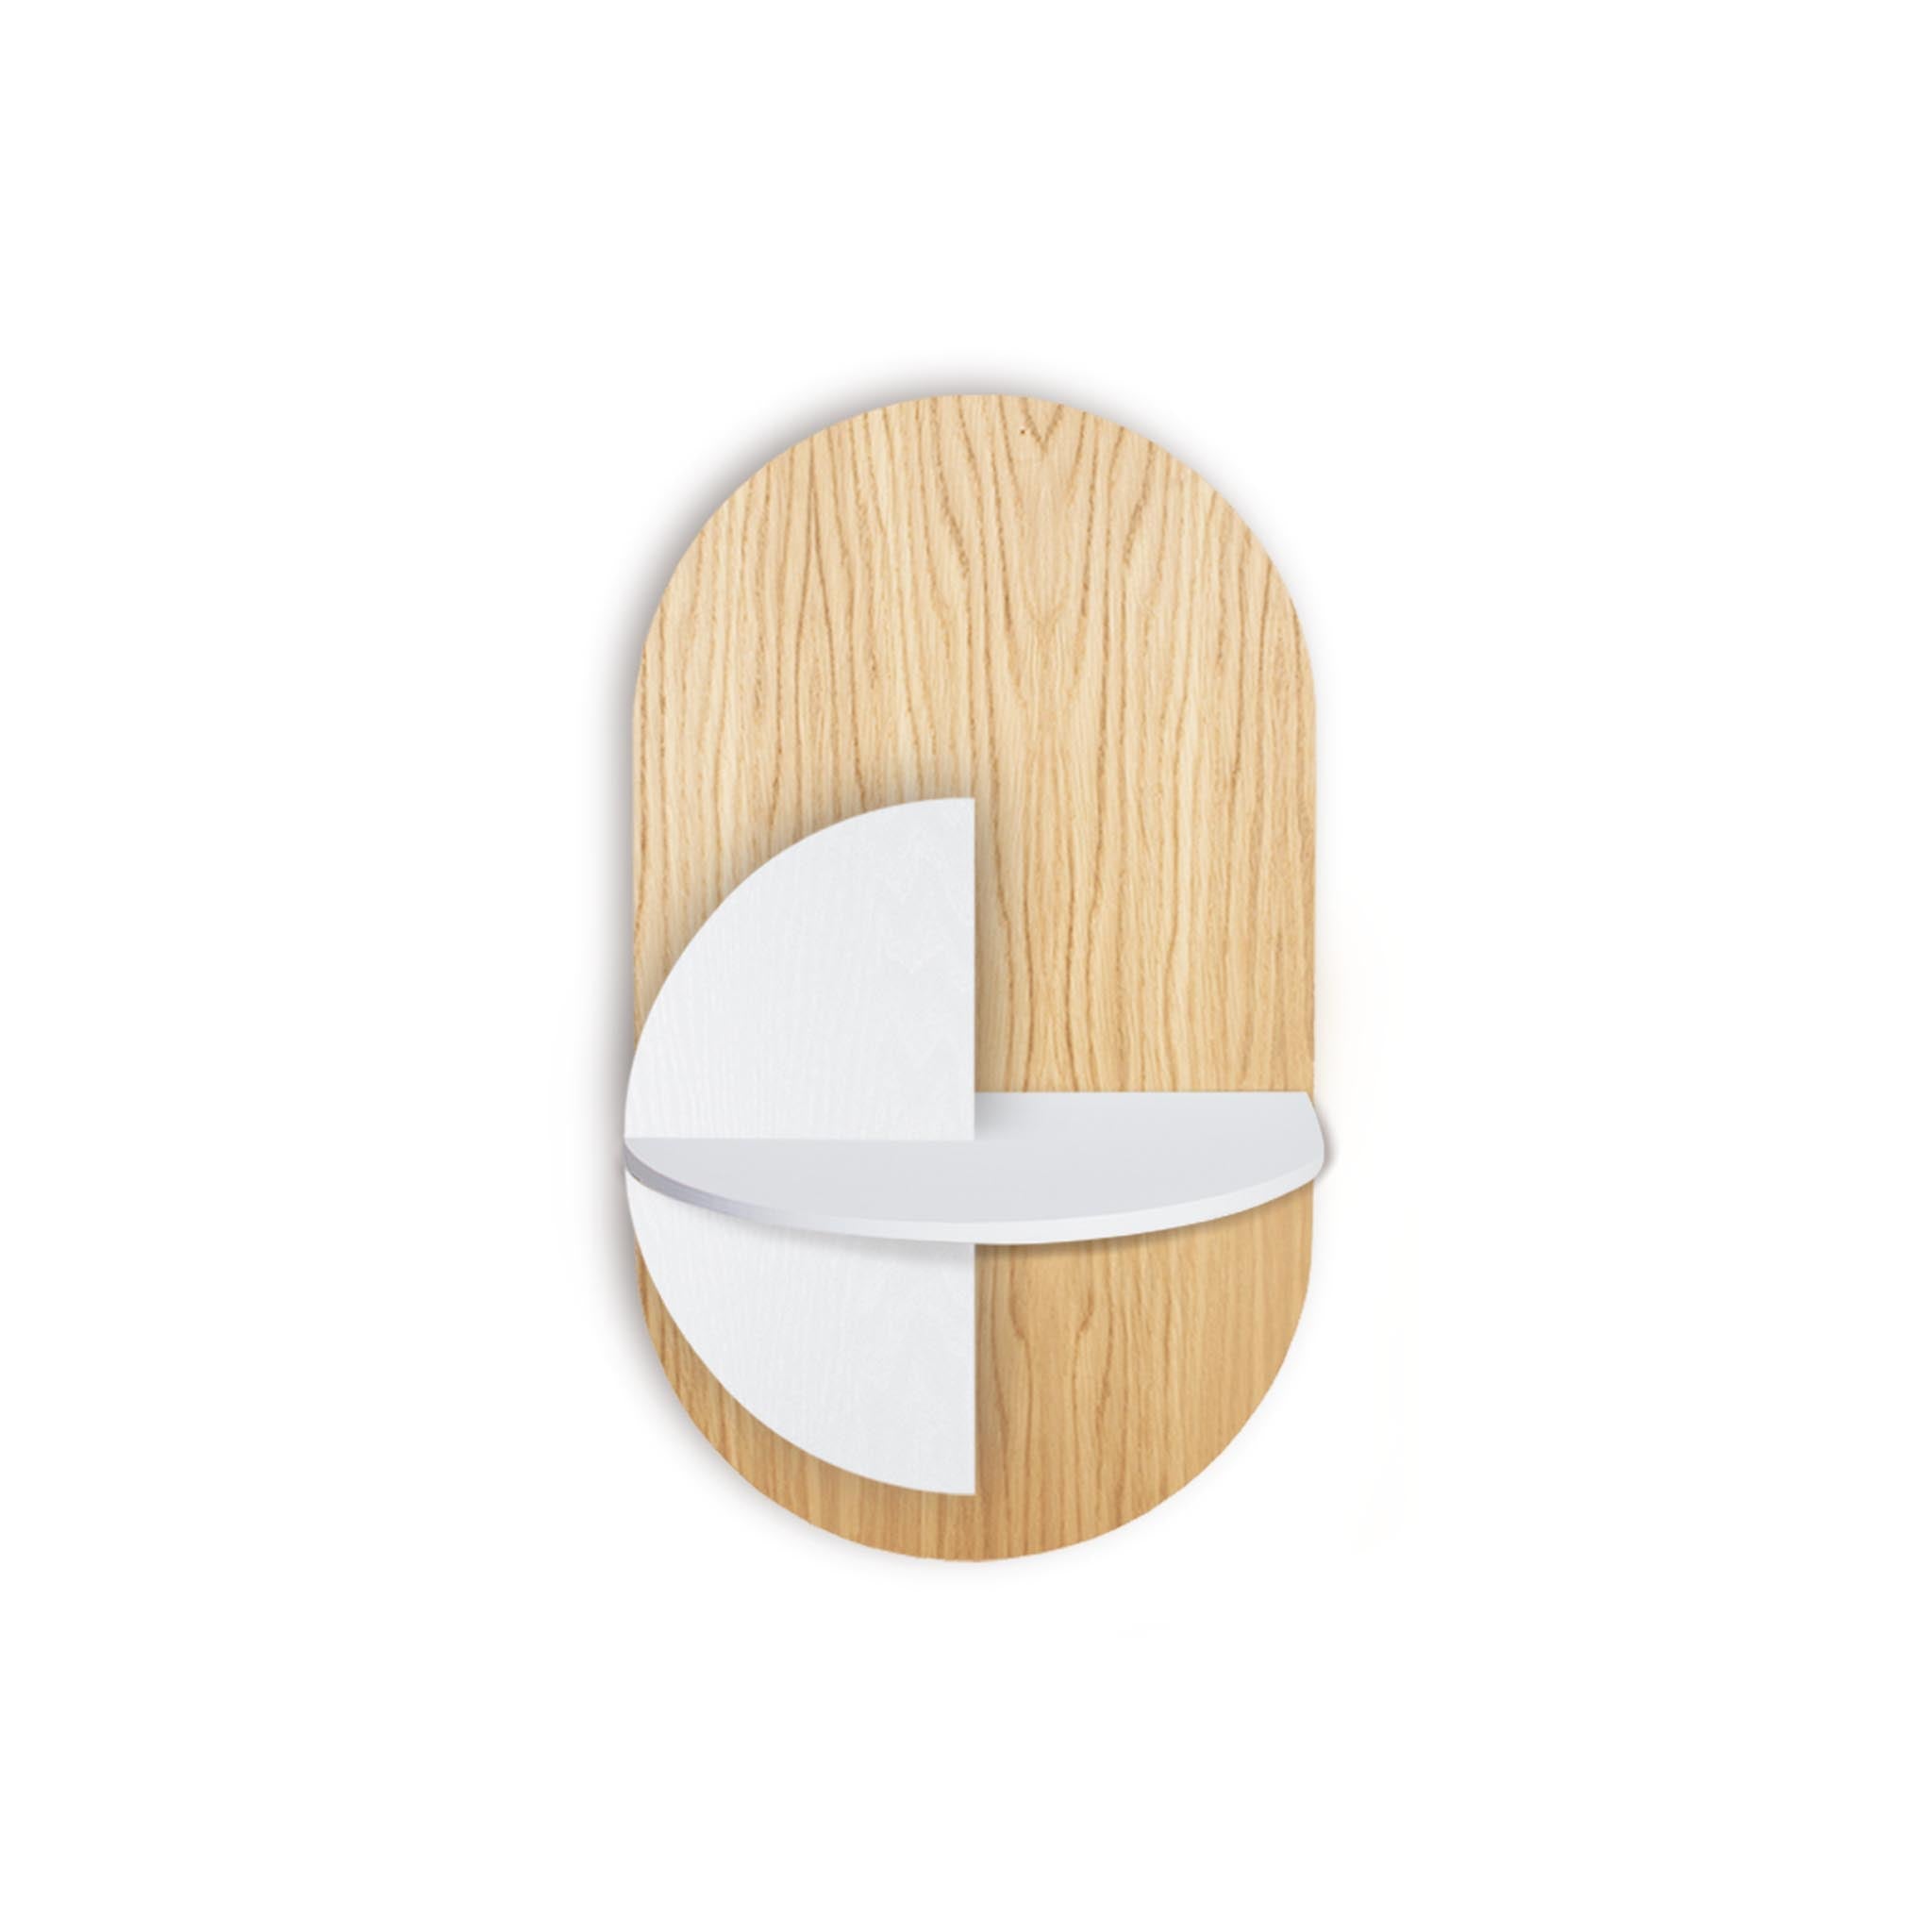 Alba slim floating nightstand · Oak oval